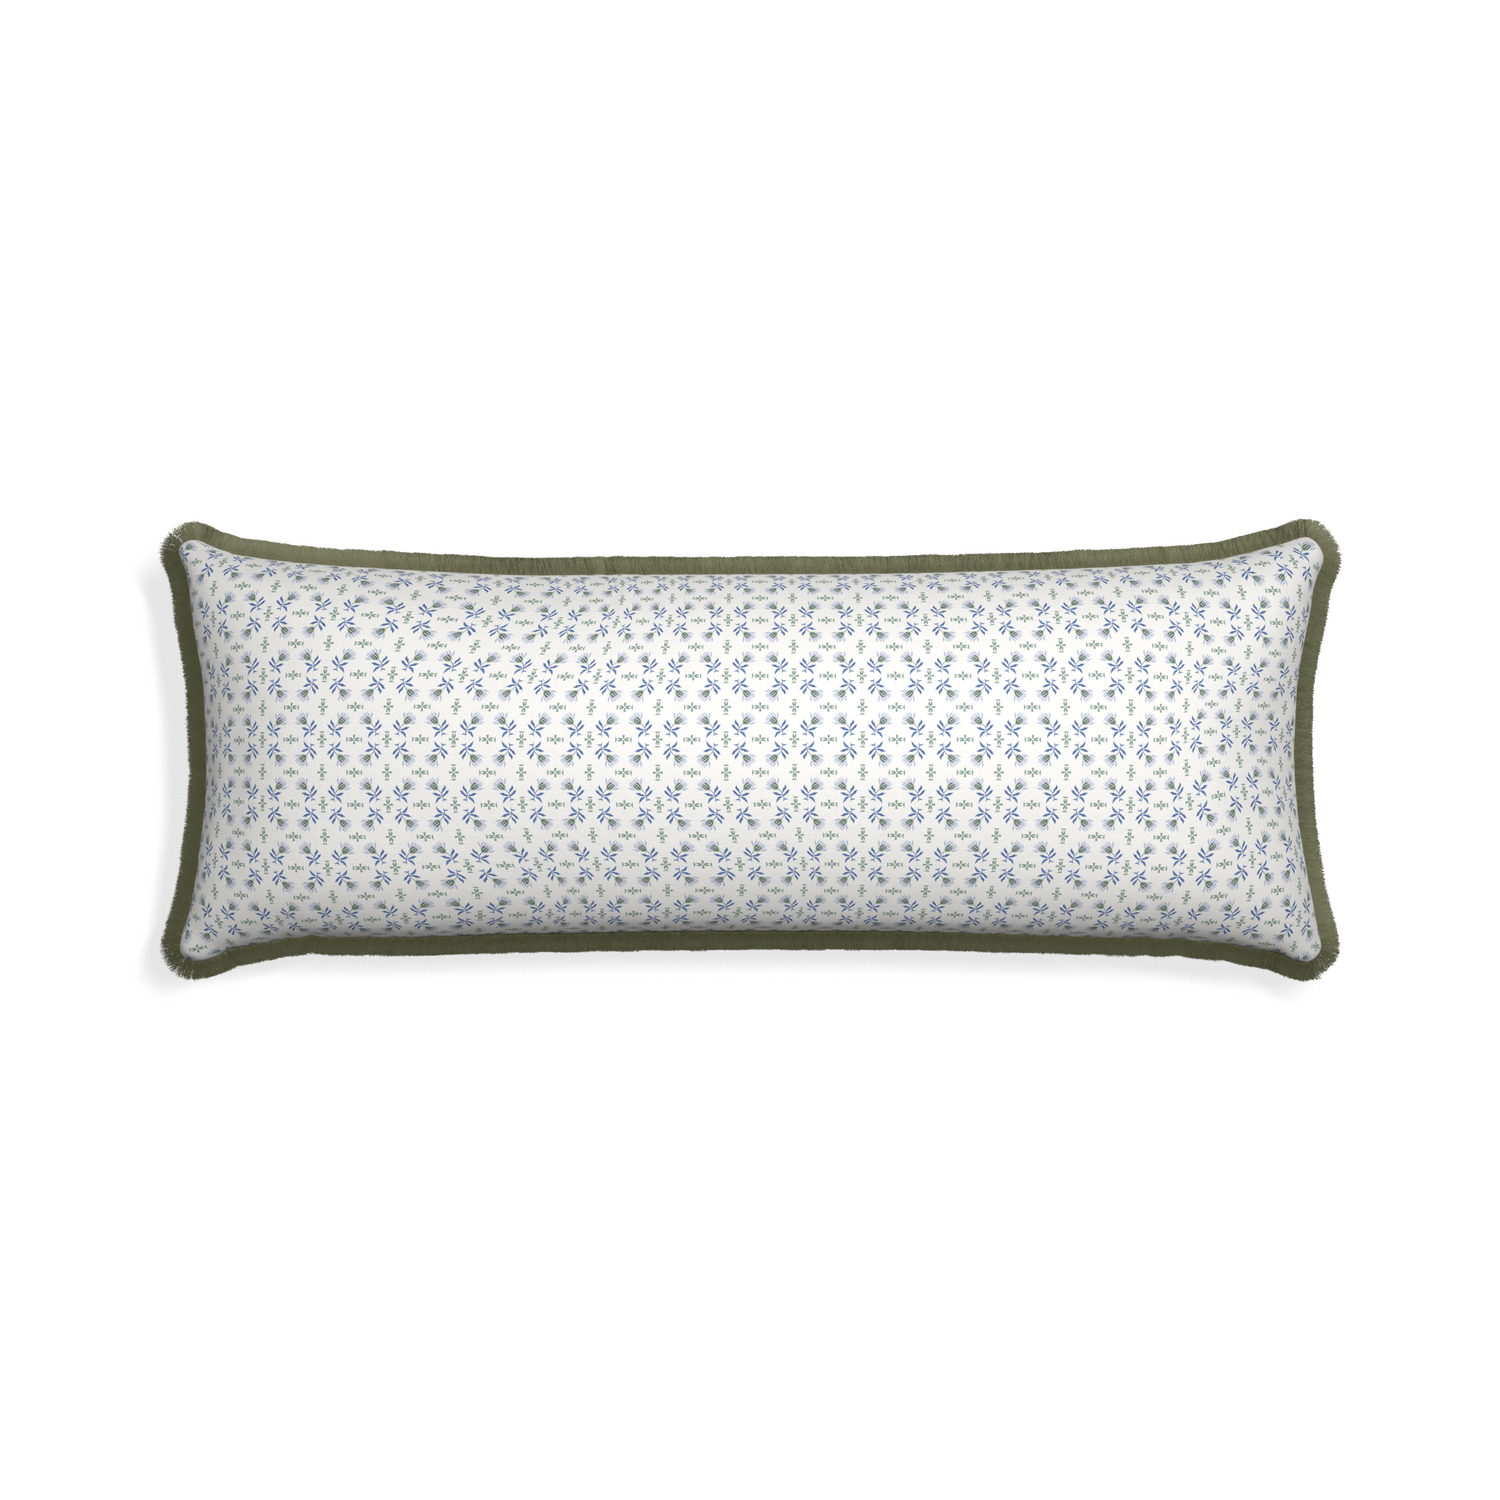 Xl-lumbar lee custom pillow with sage fringe on white background